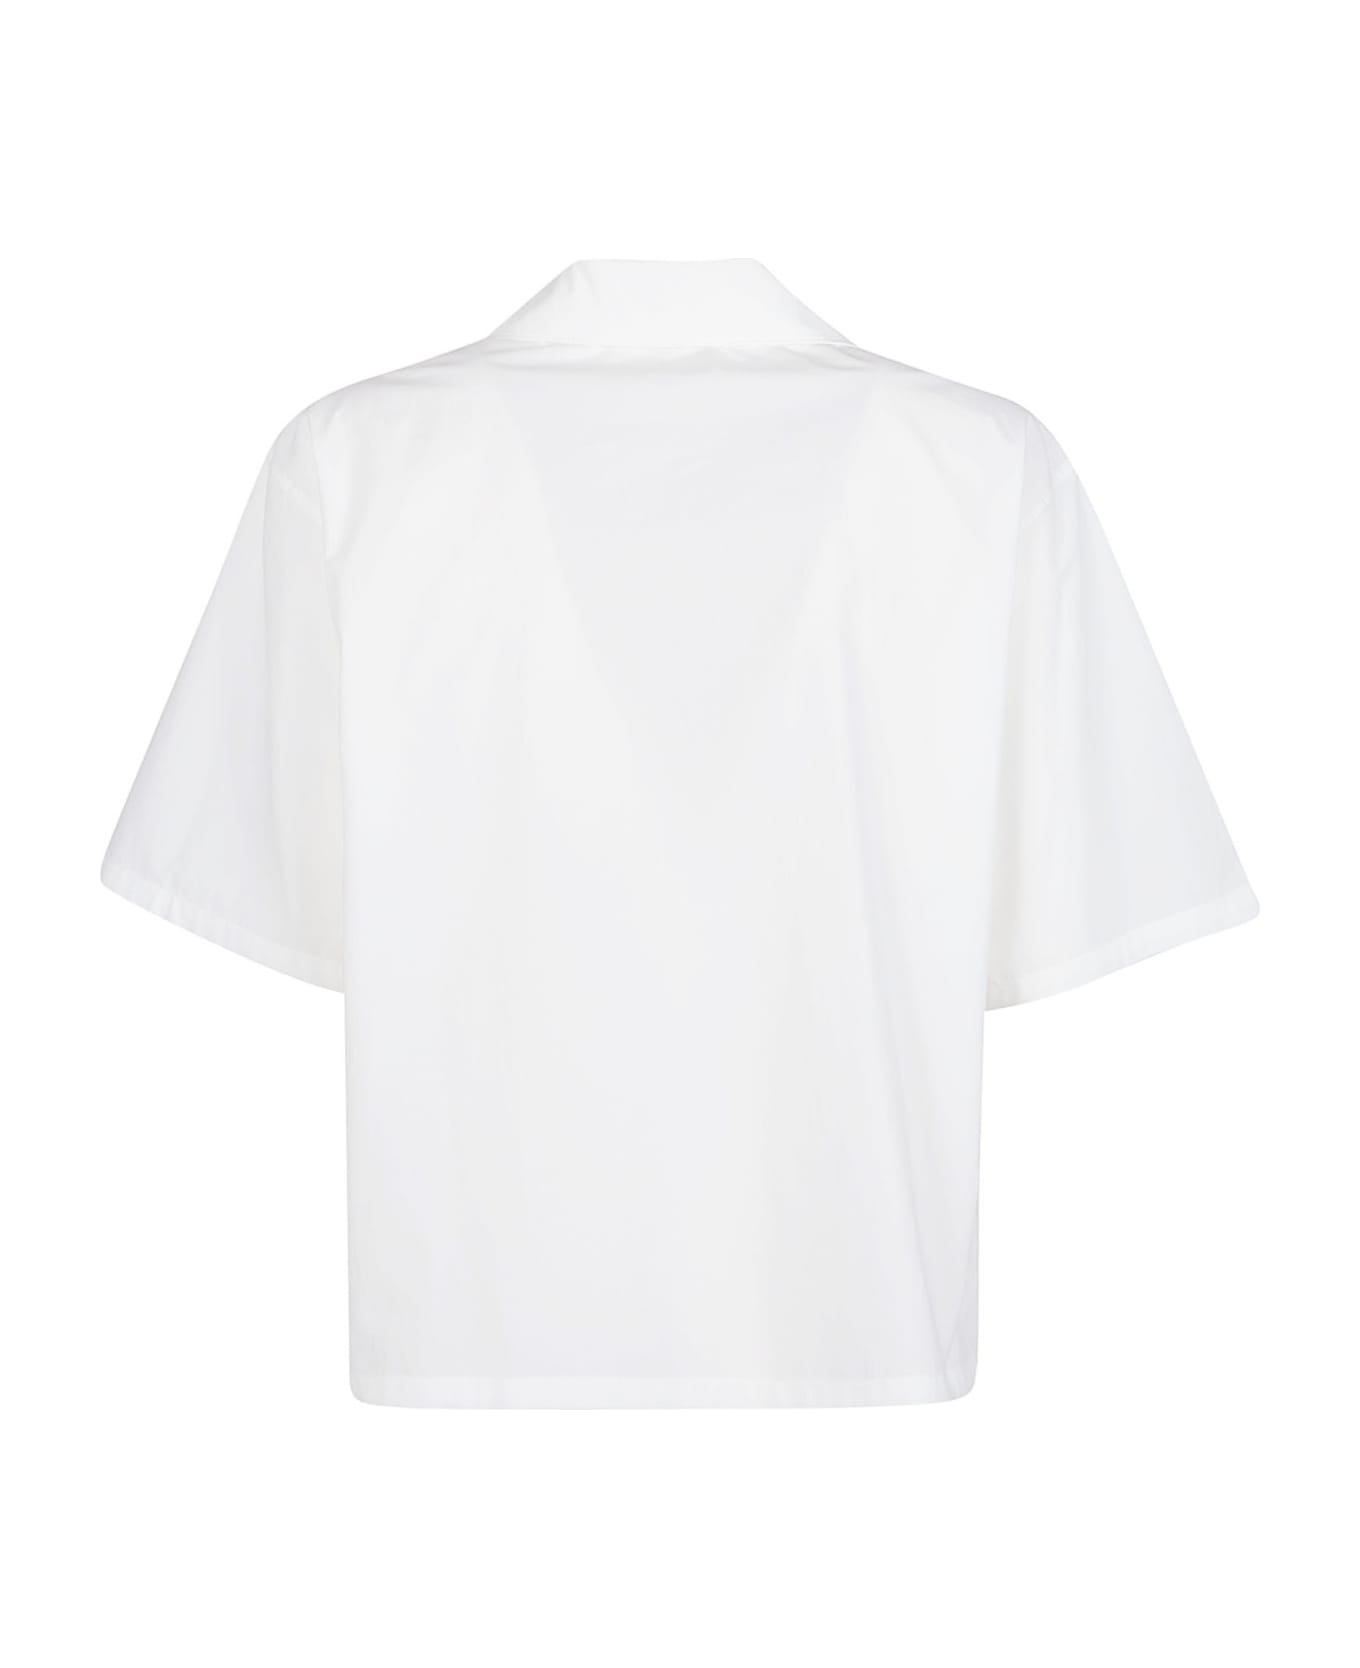 Kenzo Boke Cropped Hawaiian Short Sleeve Shirt - Blanc シャツ